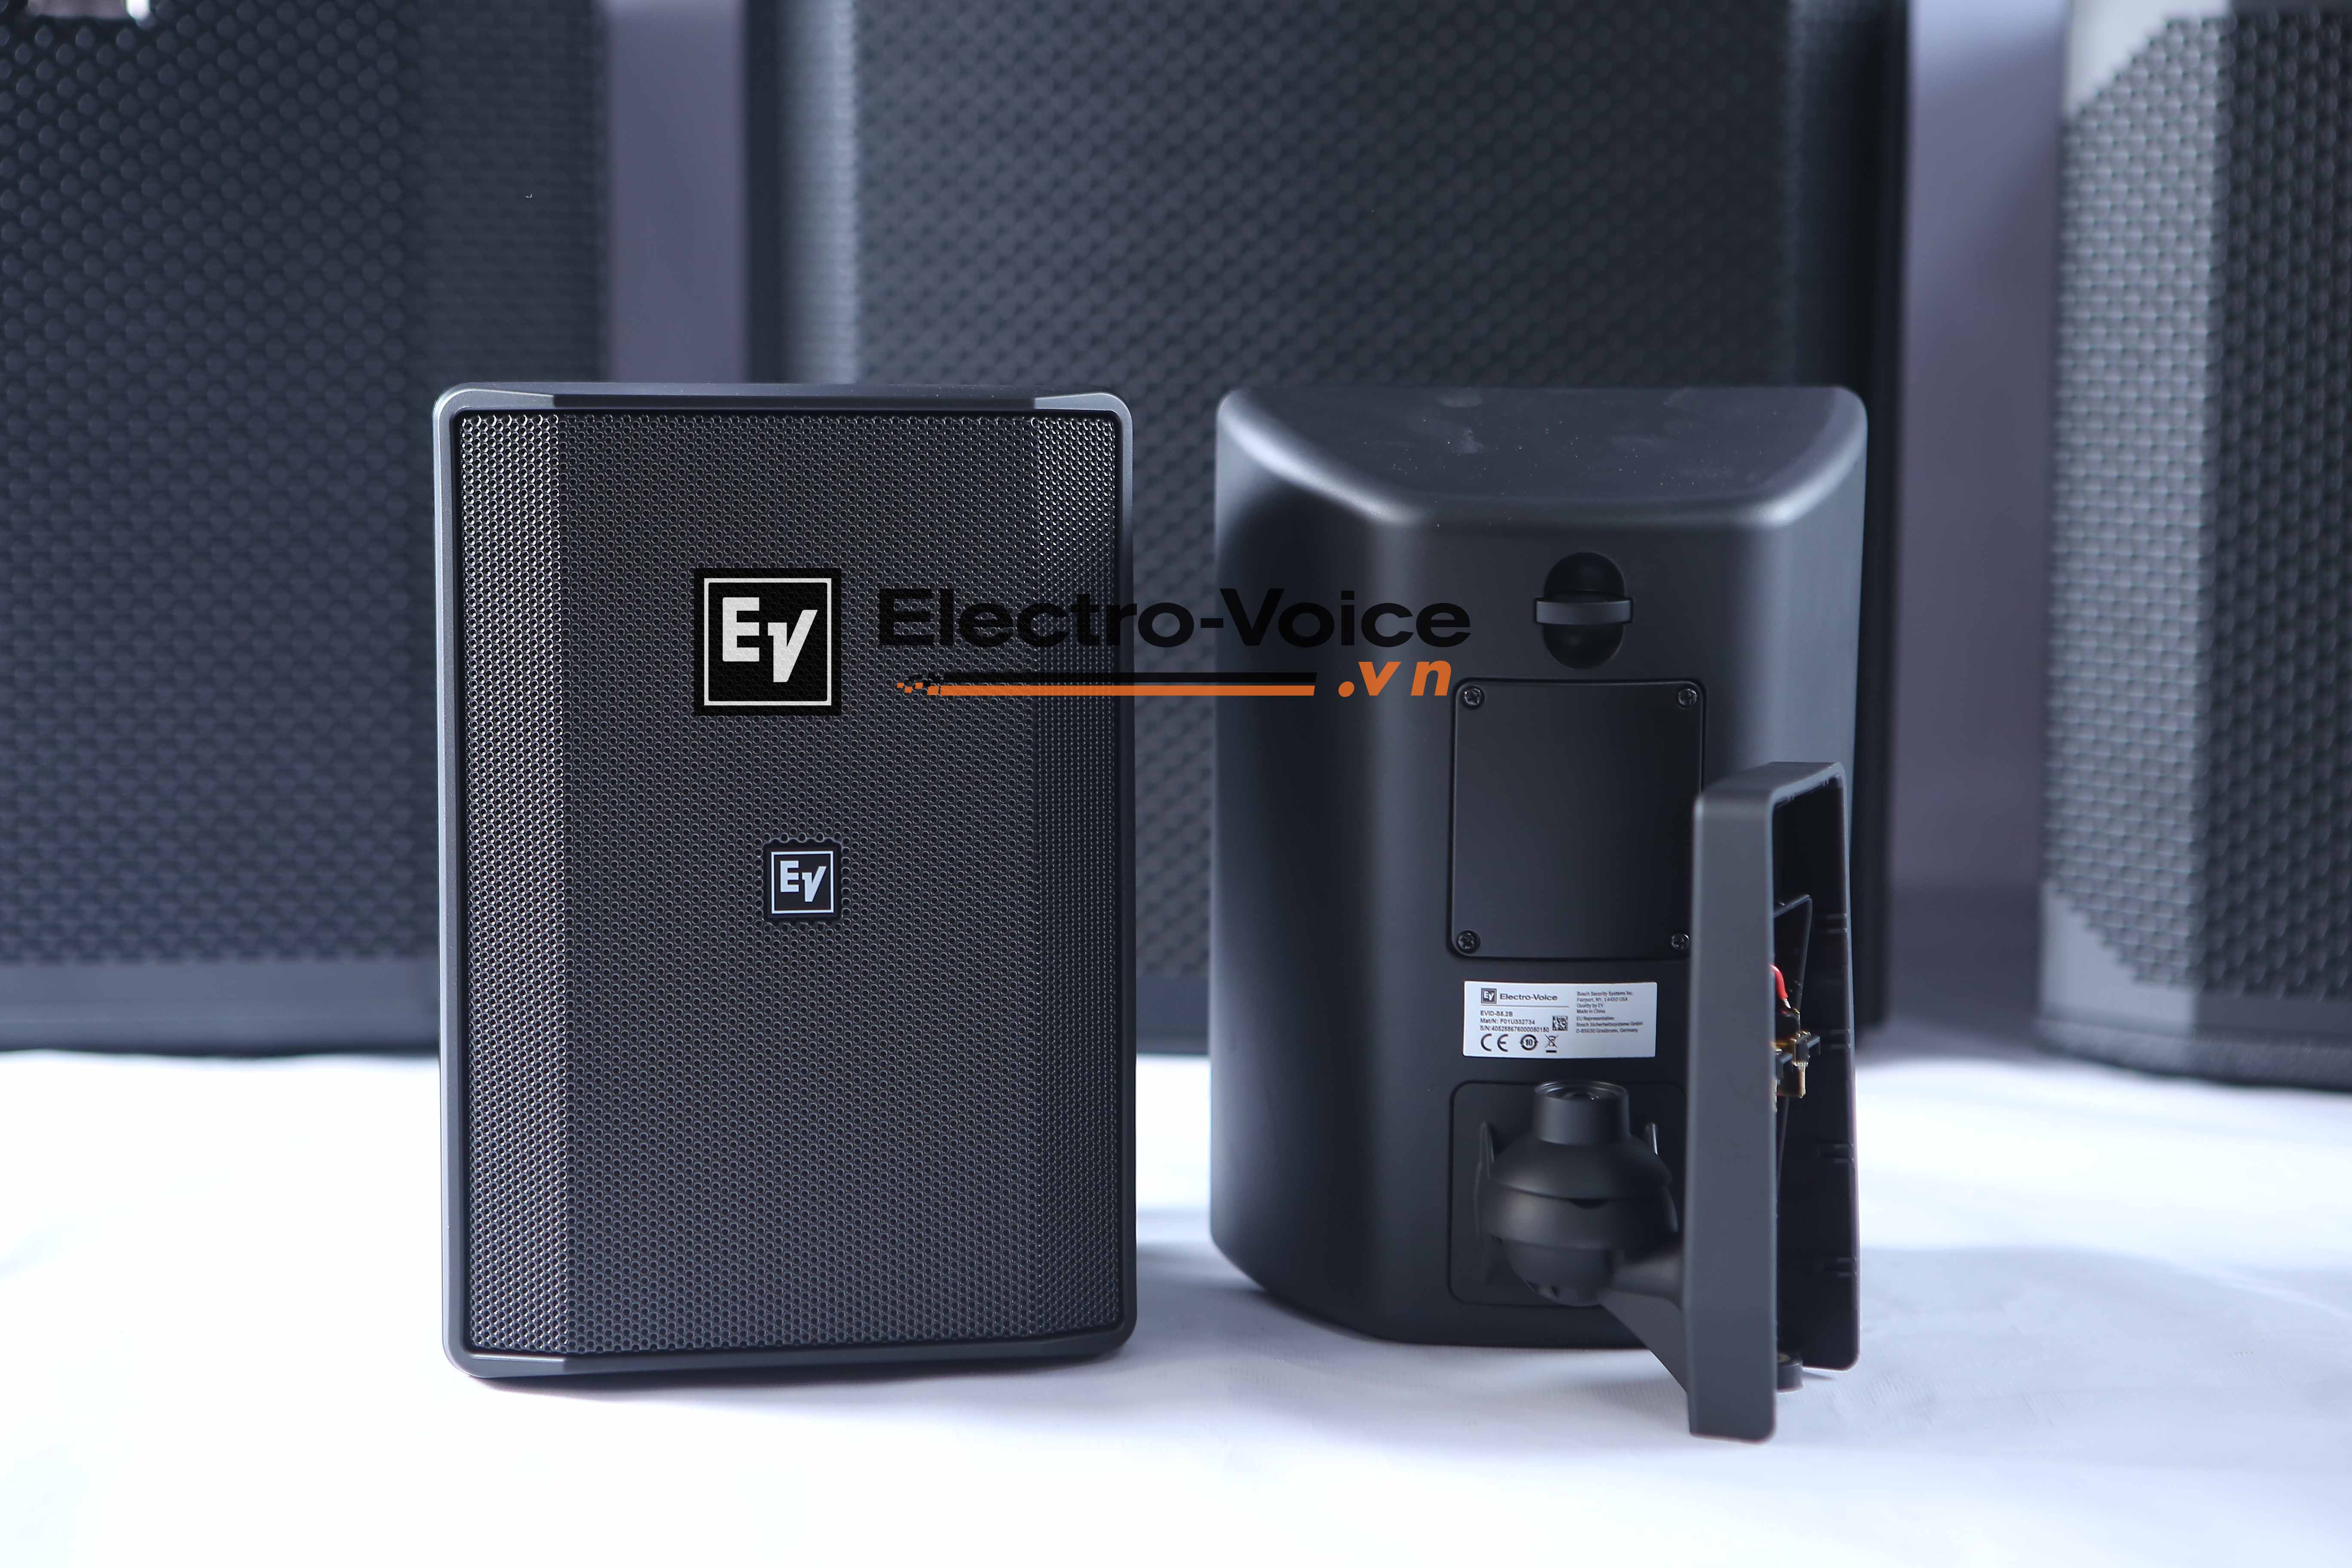 Loa gắn tường Electro-Voice EVID-S5.2B